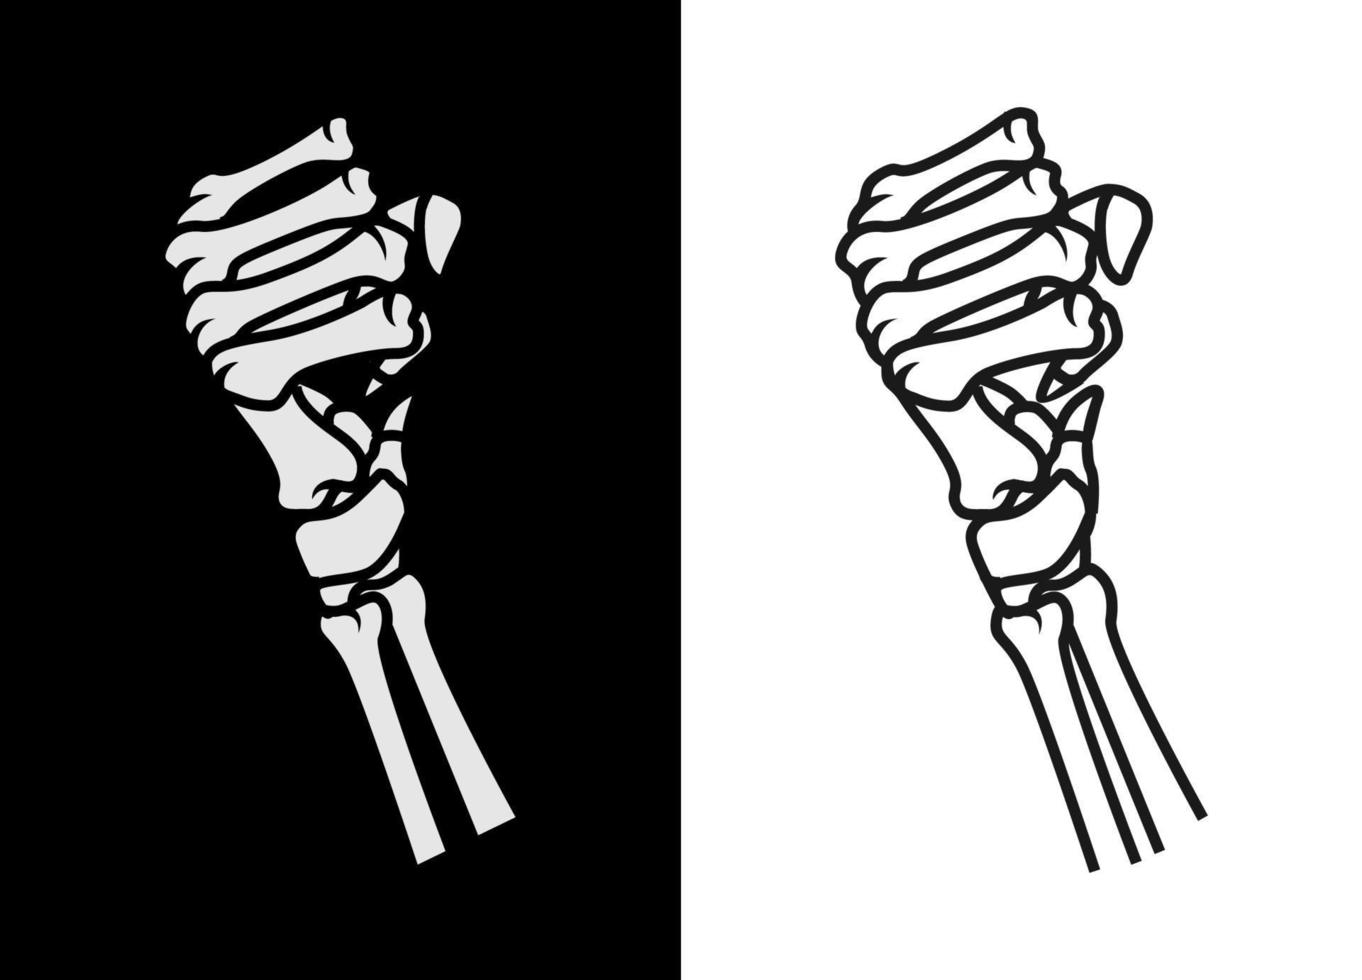 Black and white hand of human skull line art vector illustration. Rock element for apparel design, poster, merchandise, band. Vector eps 10